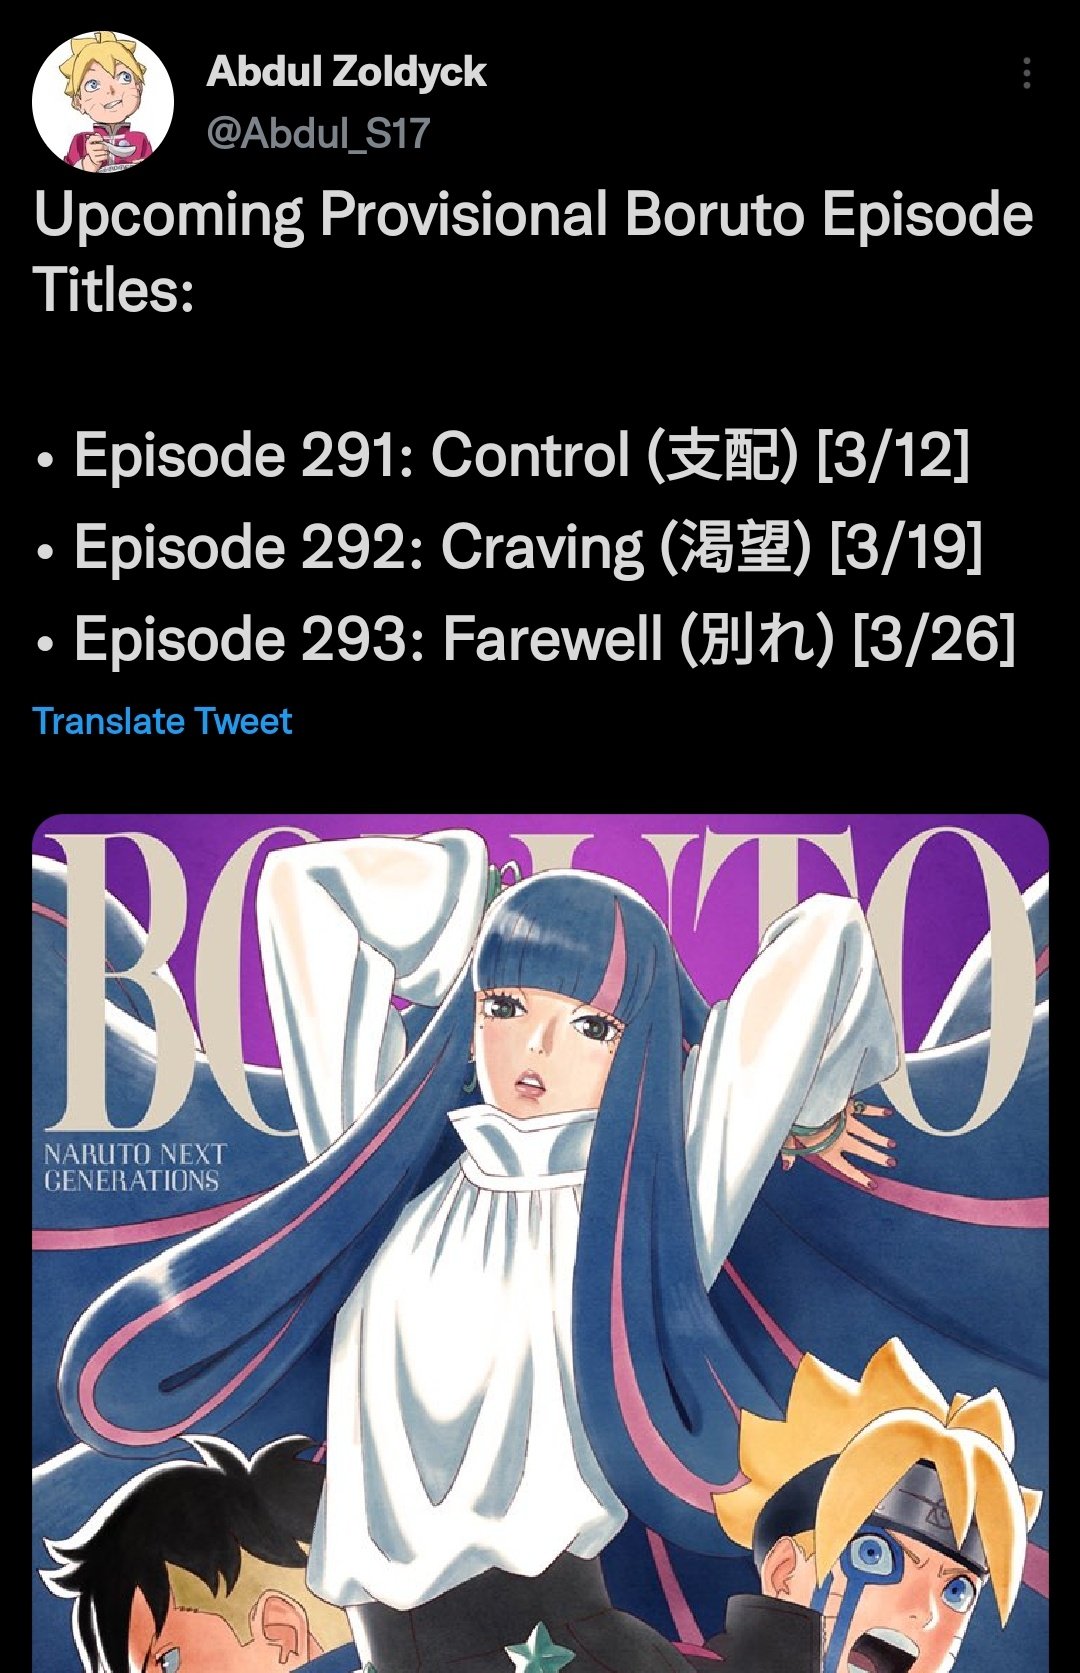 New Preview Screenshot for Boruto Episode 293 - Farewell The